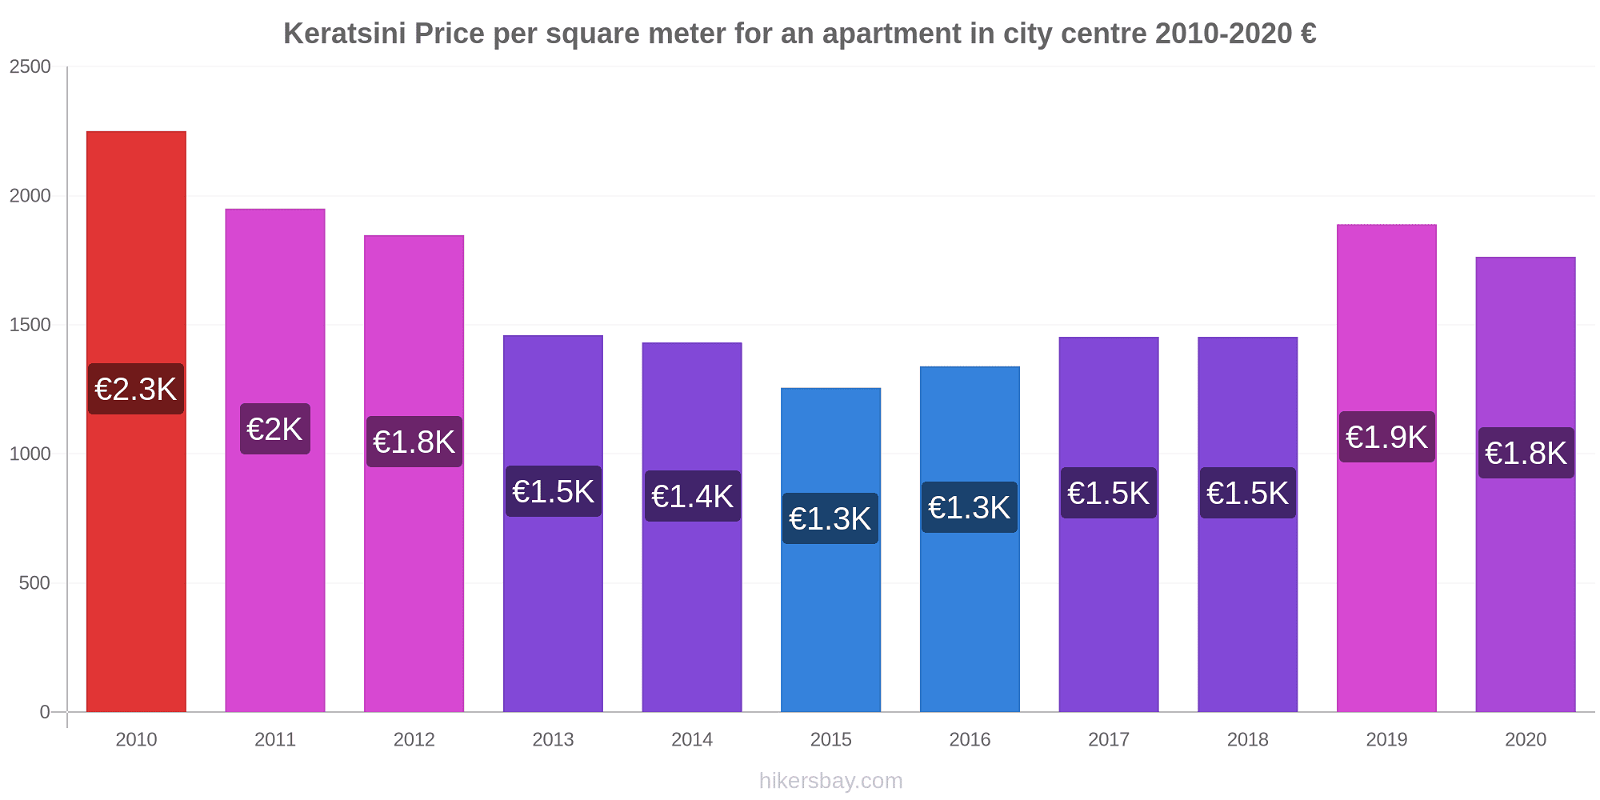 Keratsini price changes Price per square meter for an apartment in city centre hikersbay.com